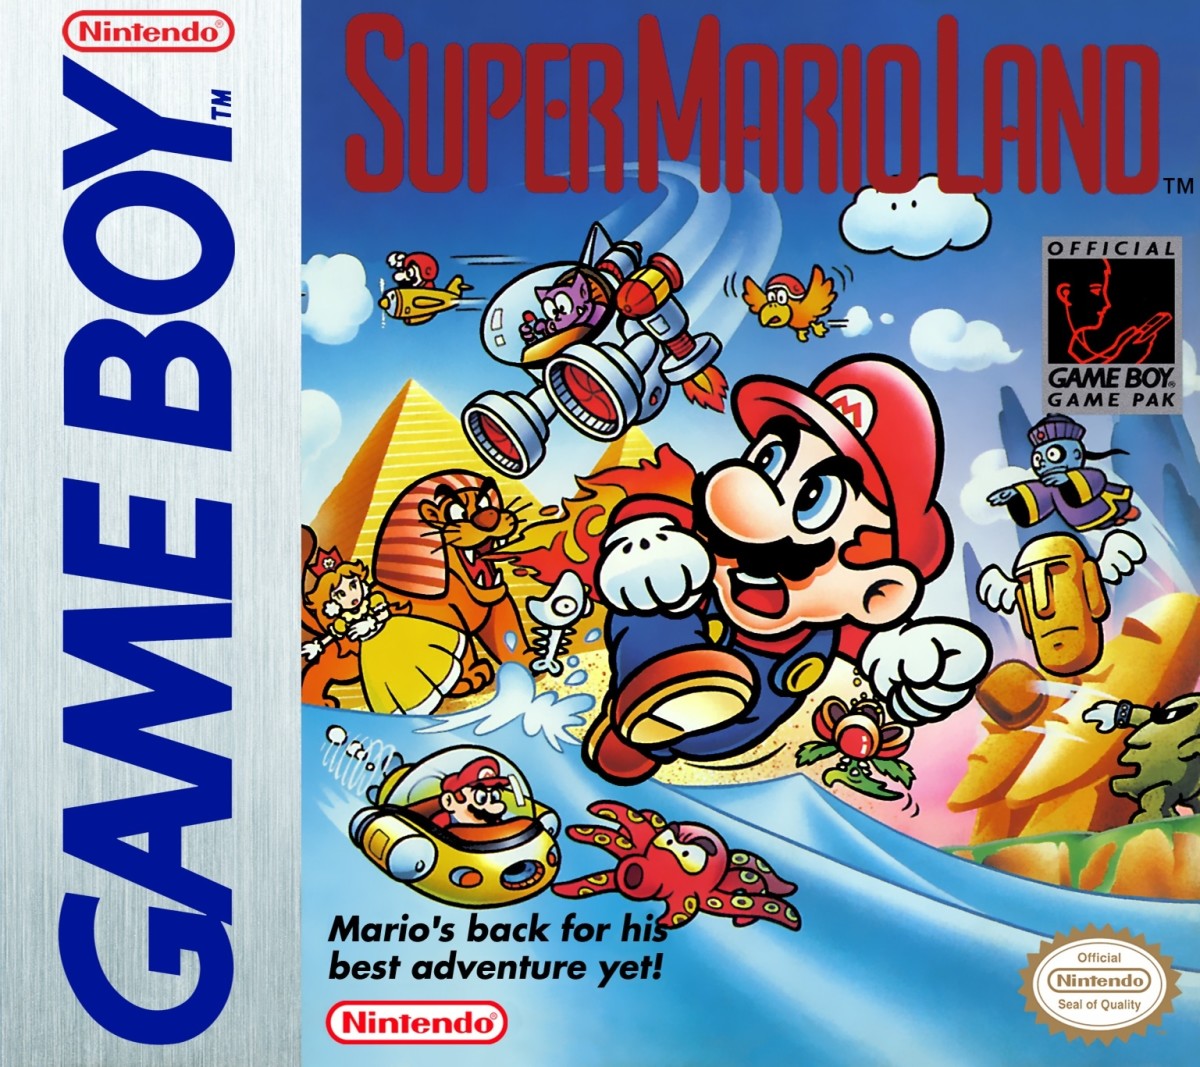 The North American box art for "Super Mario Land."